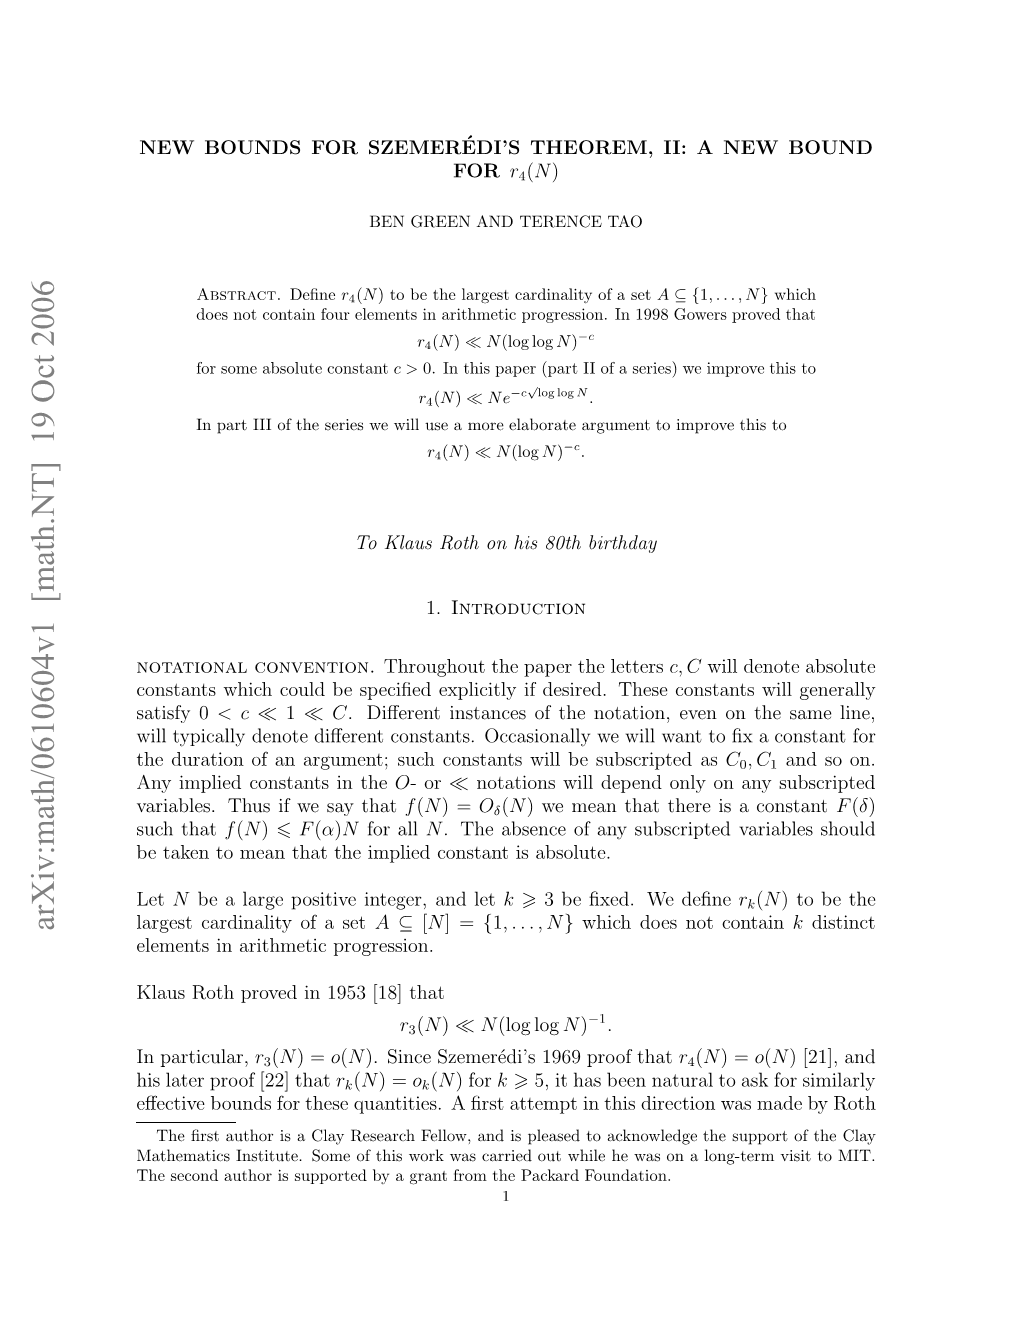 Arxiv:Math/0610604V1 [Math.NT] 19 Oct 2006 Lu Ohpoe N15 1]That [18] 1953 in Proved Roth Klaus Progression